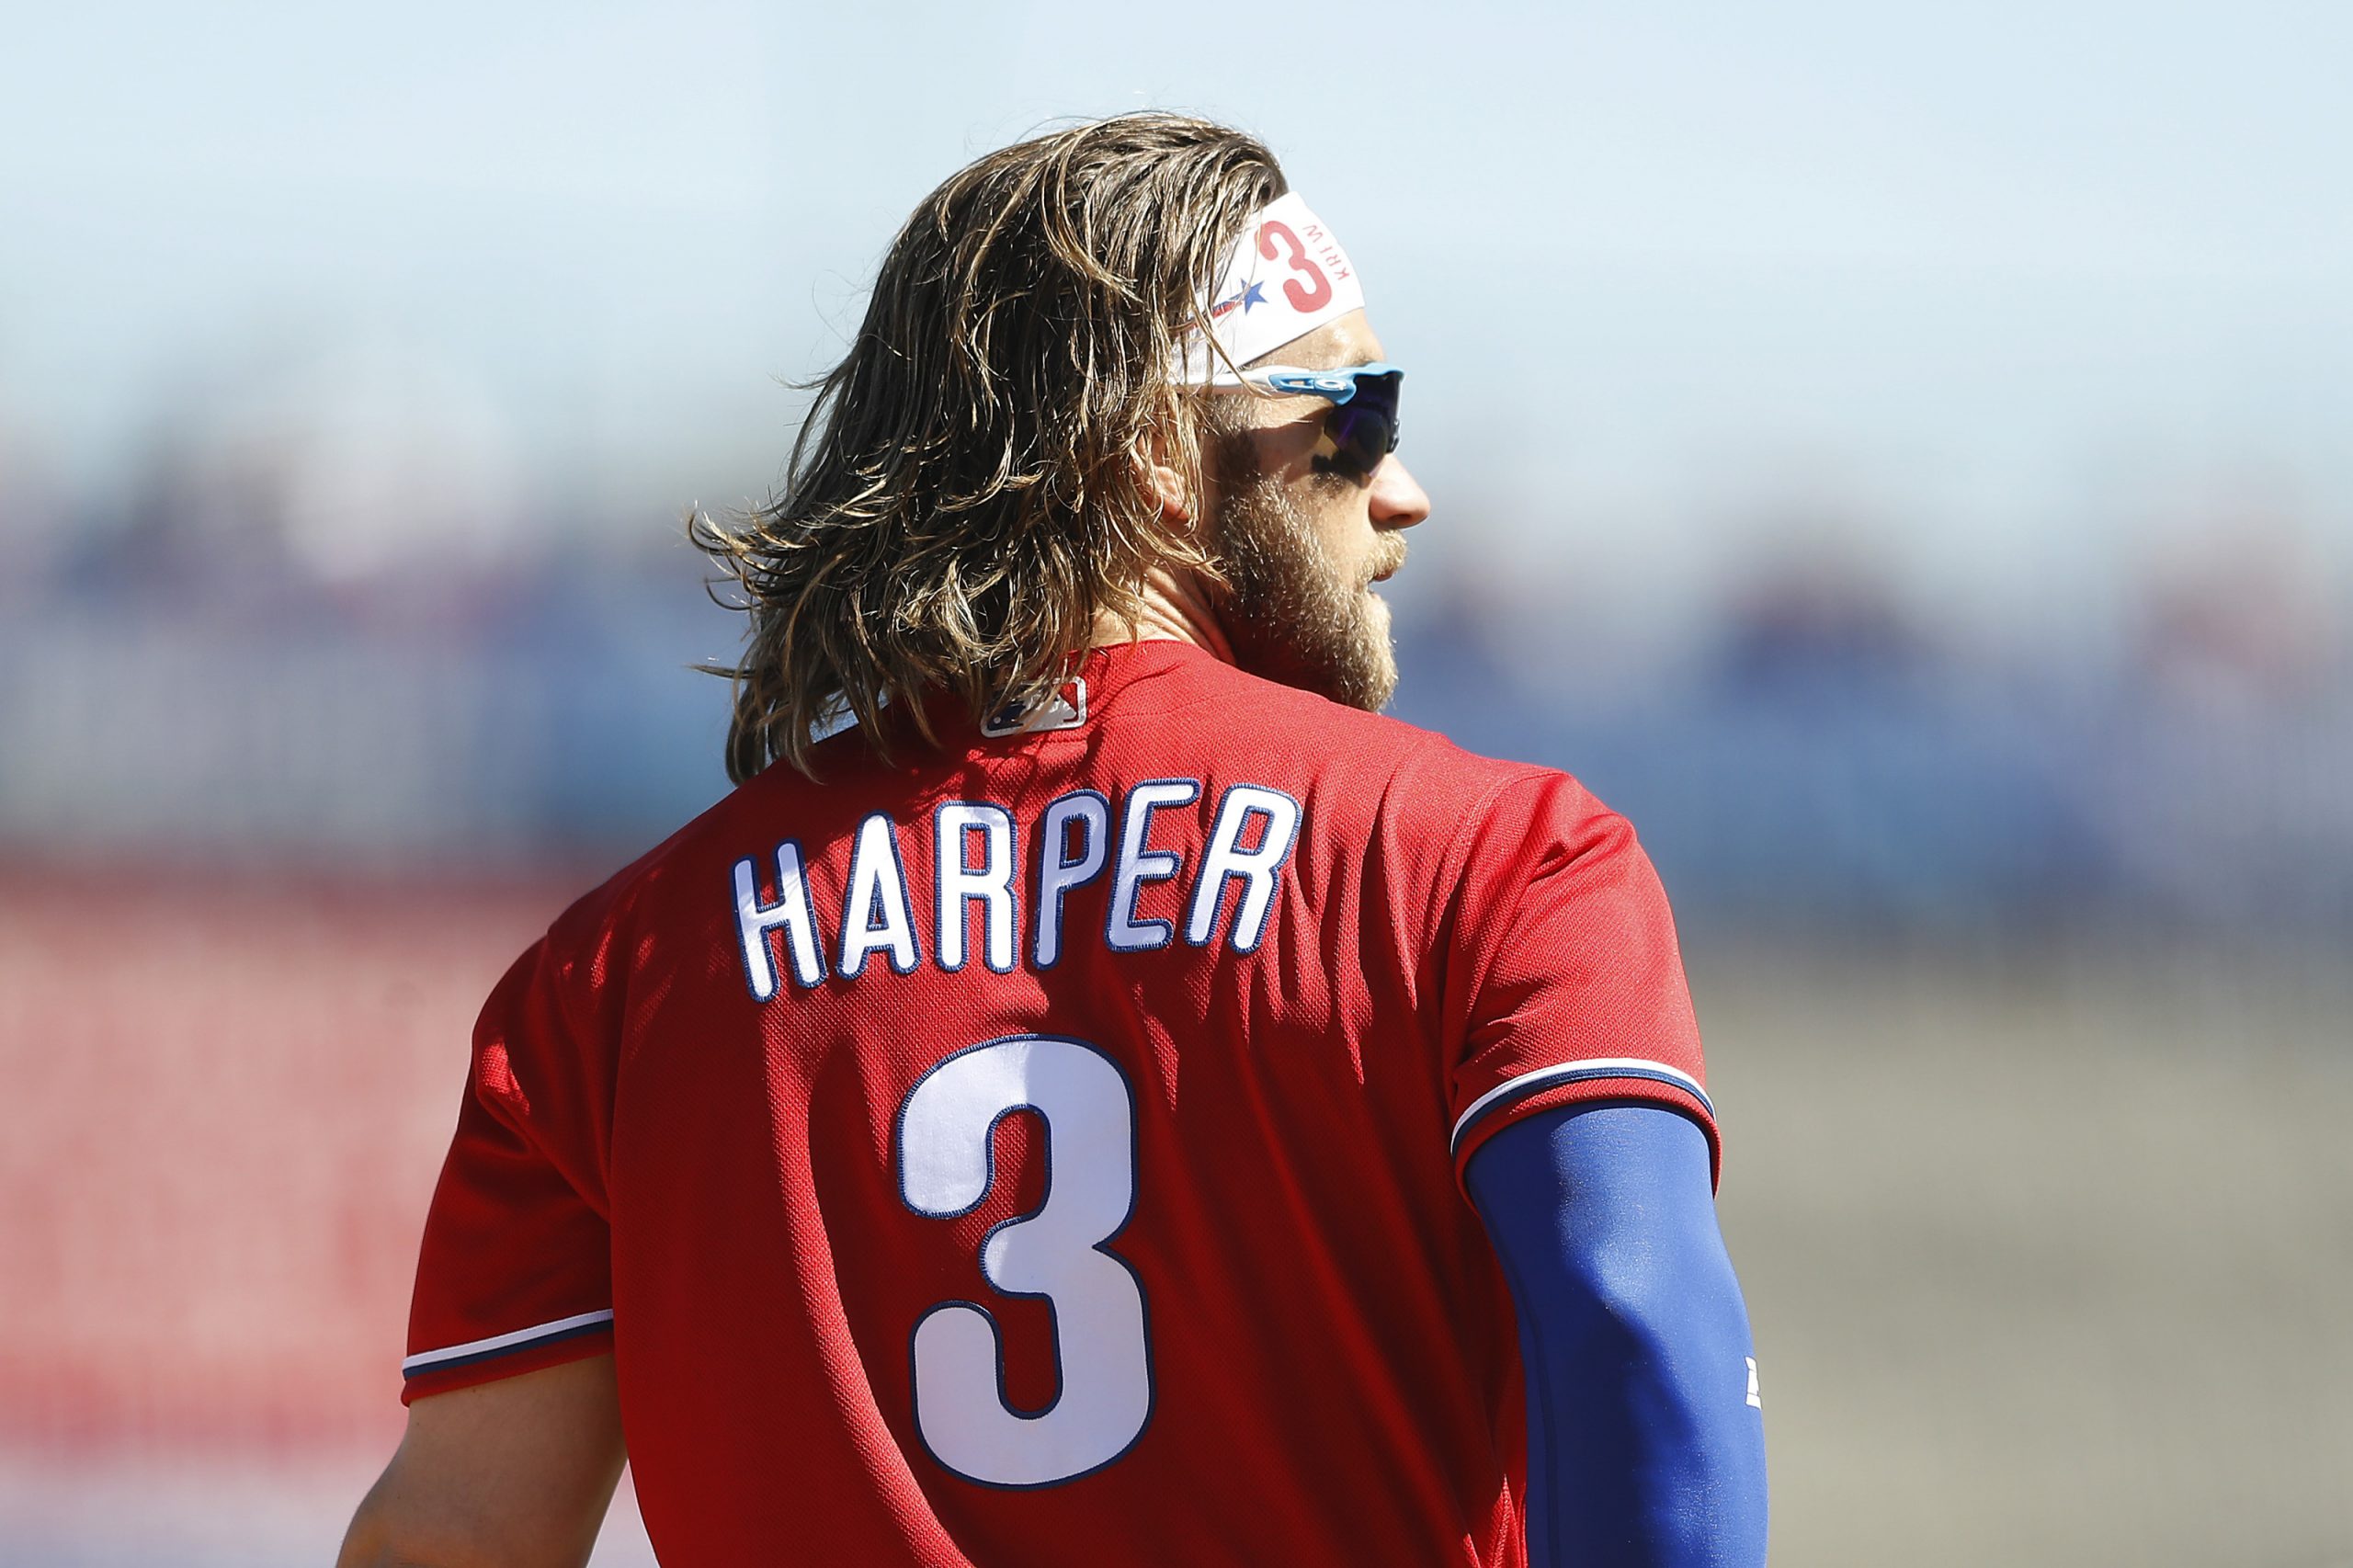 11 Best Bryce harper haircut ideas  bryce harper haircut, bryce harper,  bryce harper hair